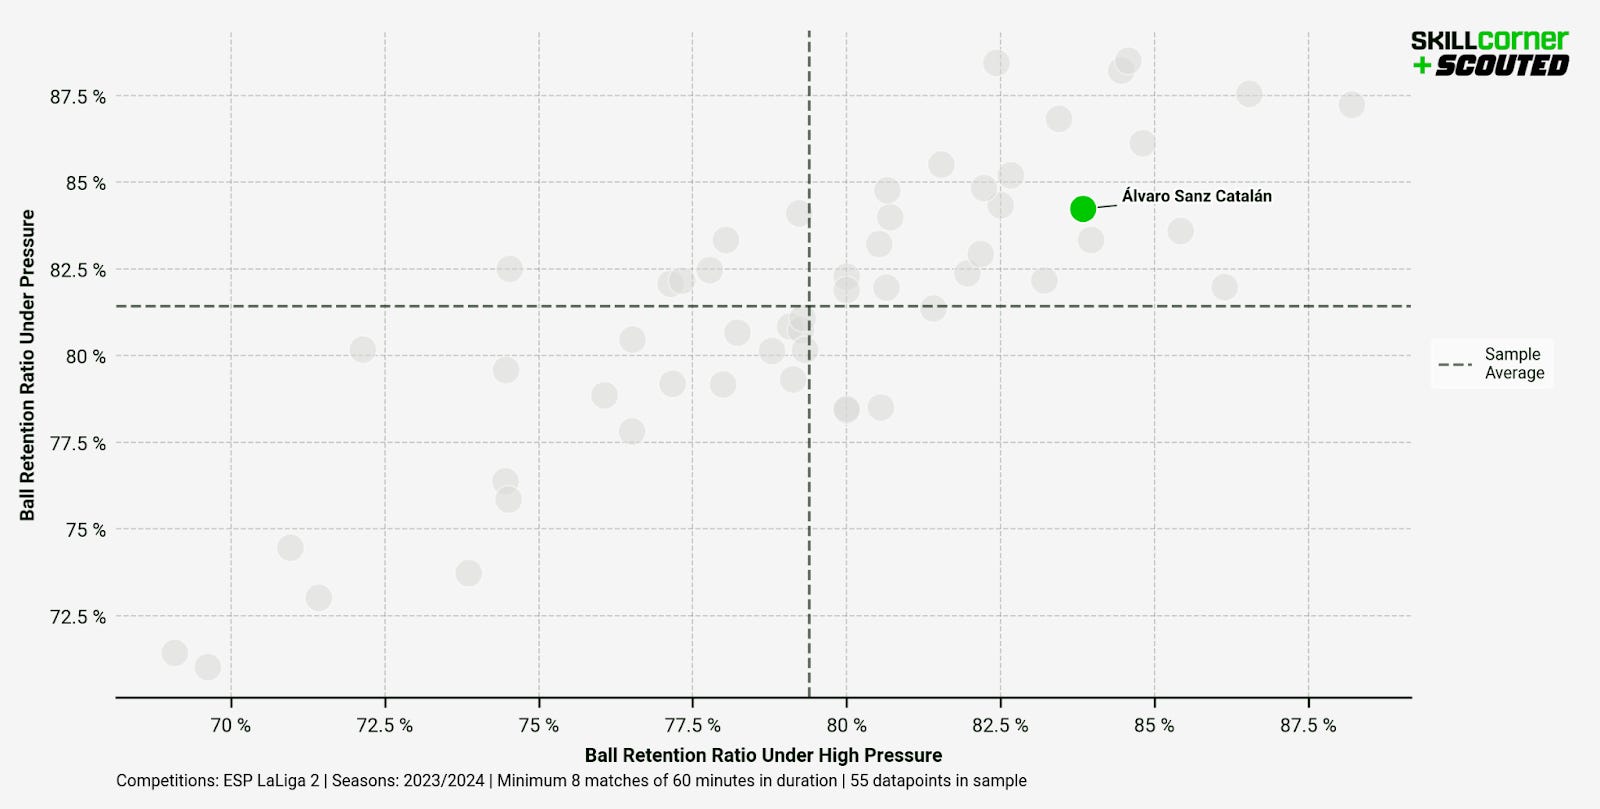 A SCOUTED x SkillCorner scatter graph plotting Ball Retention Ratio Under Pressure against Ball Retention Ratio Under High Pressure among all Segunda División midfielders in the 2023/24 season.